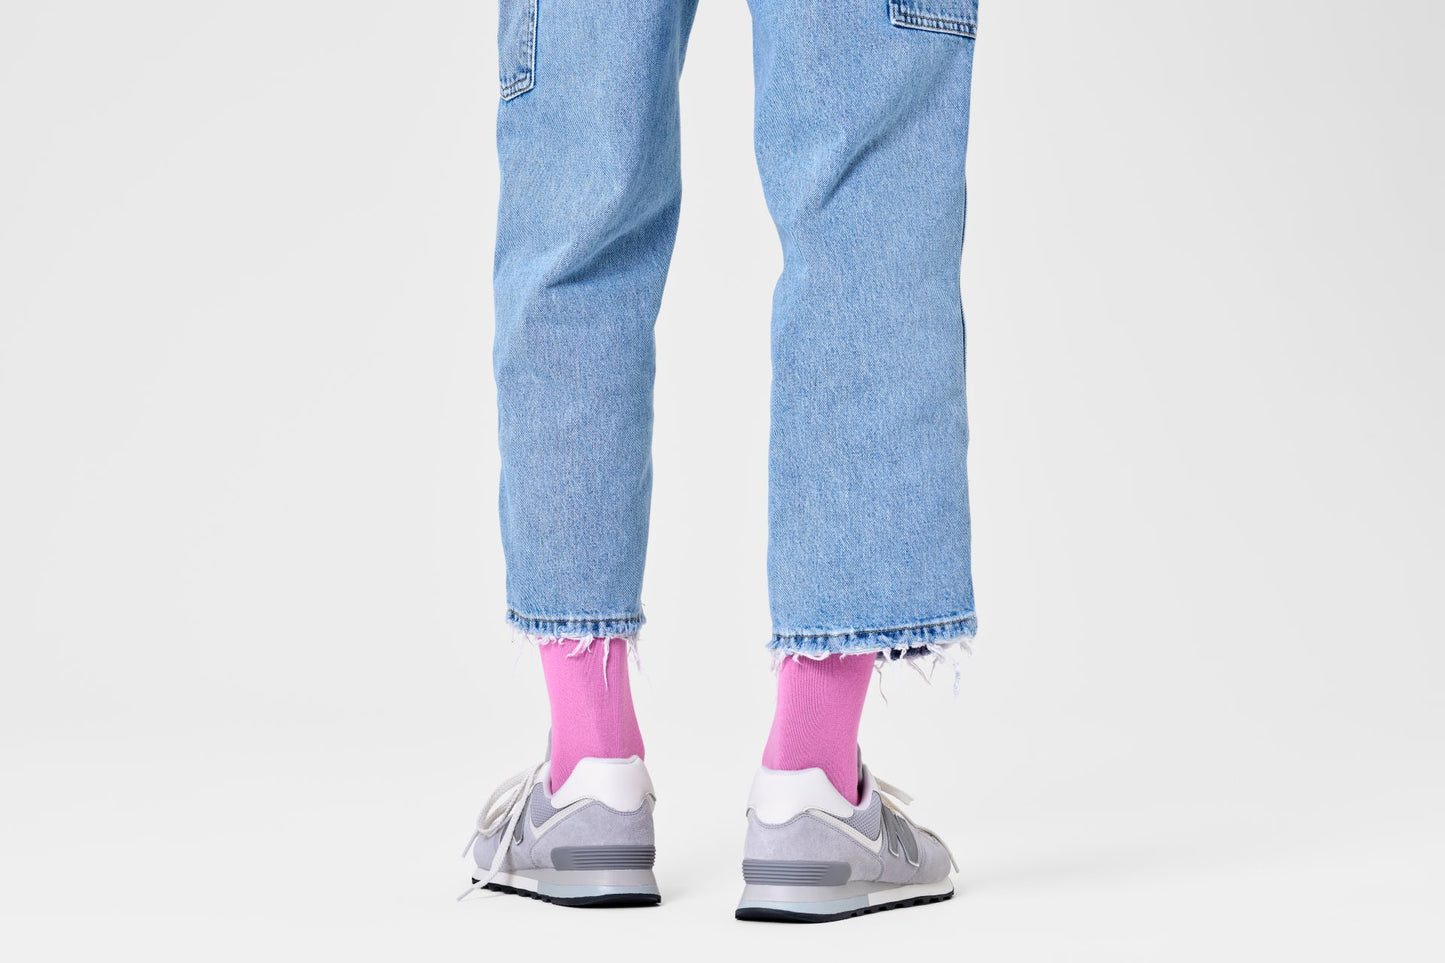 Pink Solid Crew Sock